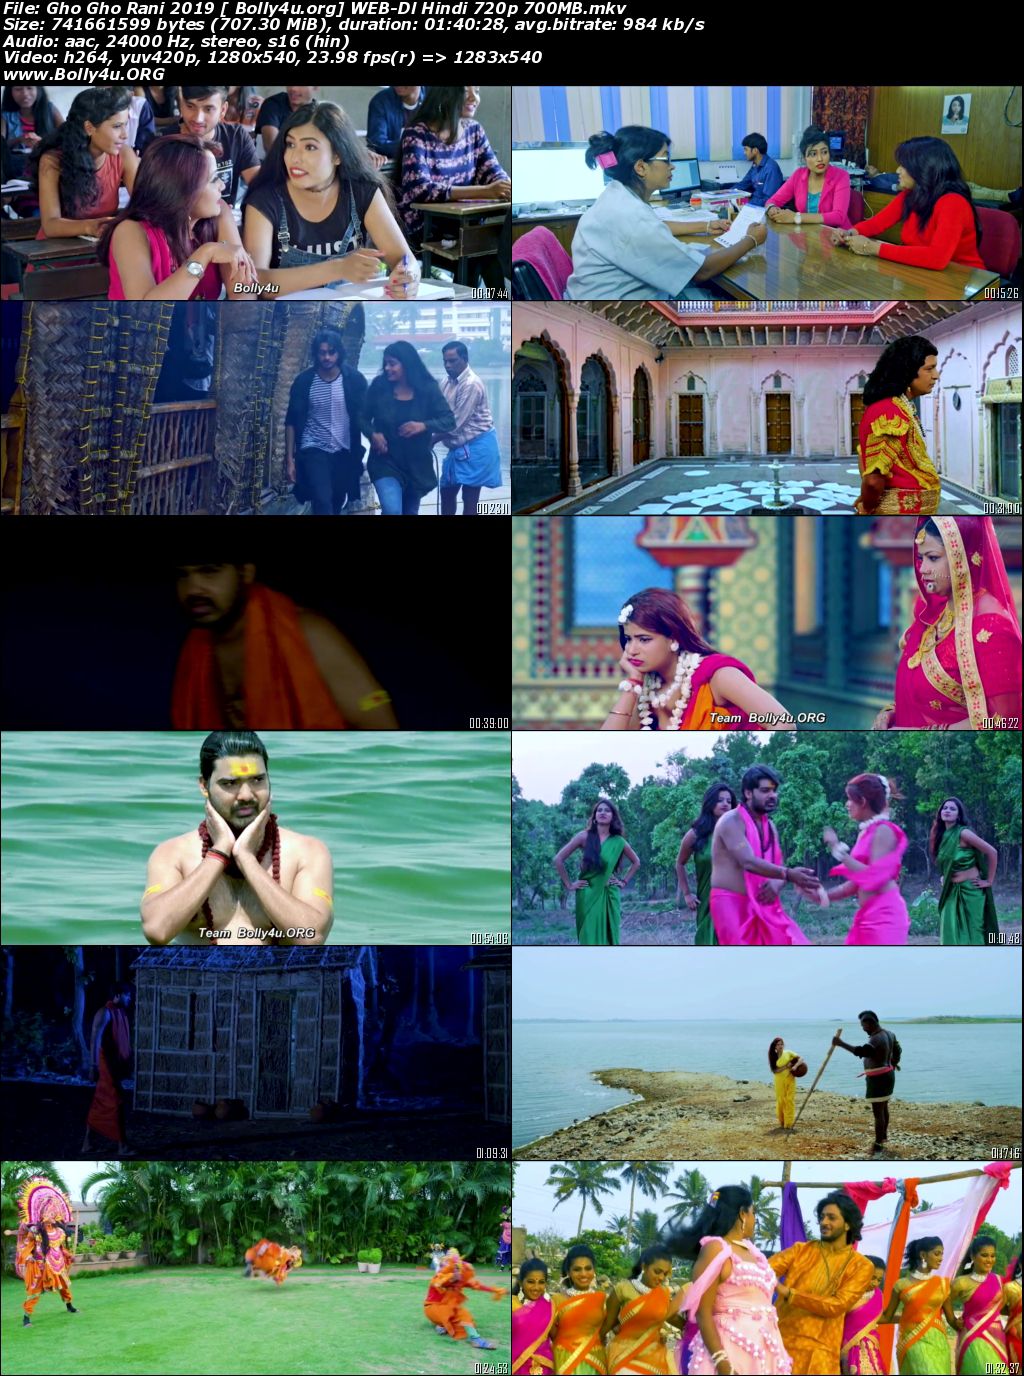 Gho Gho Rani 2019 WEB-DL 700b Hindi Movie Download 720p